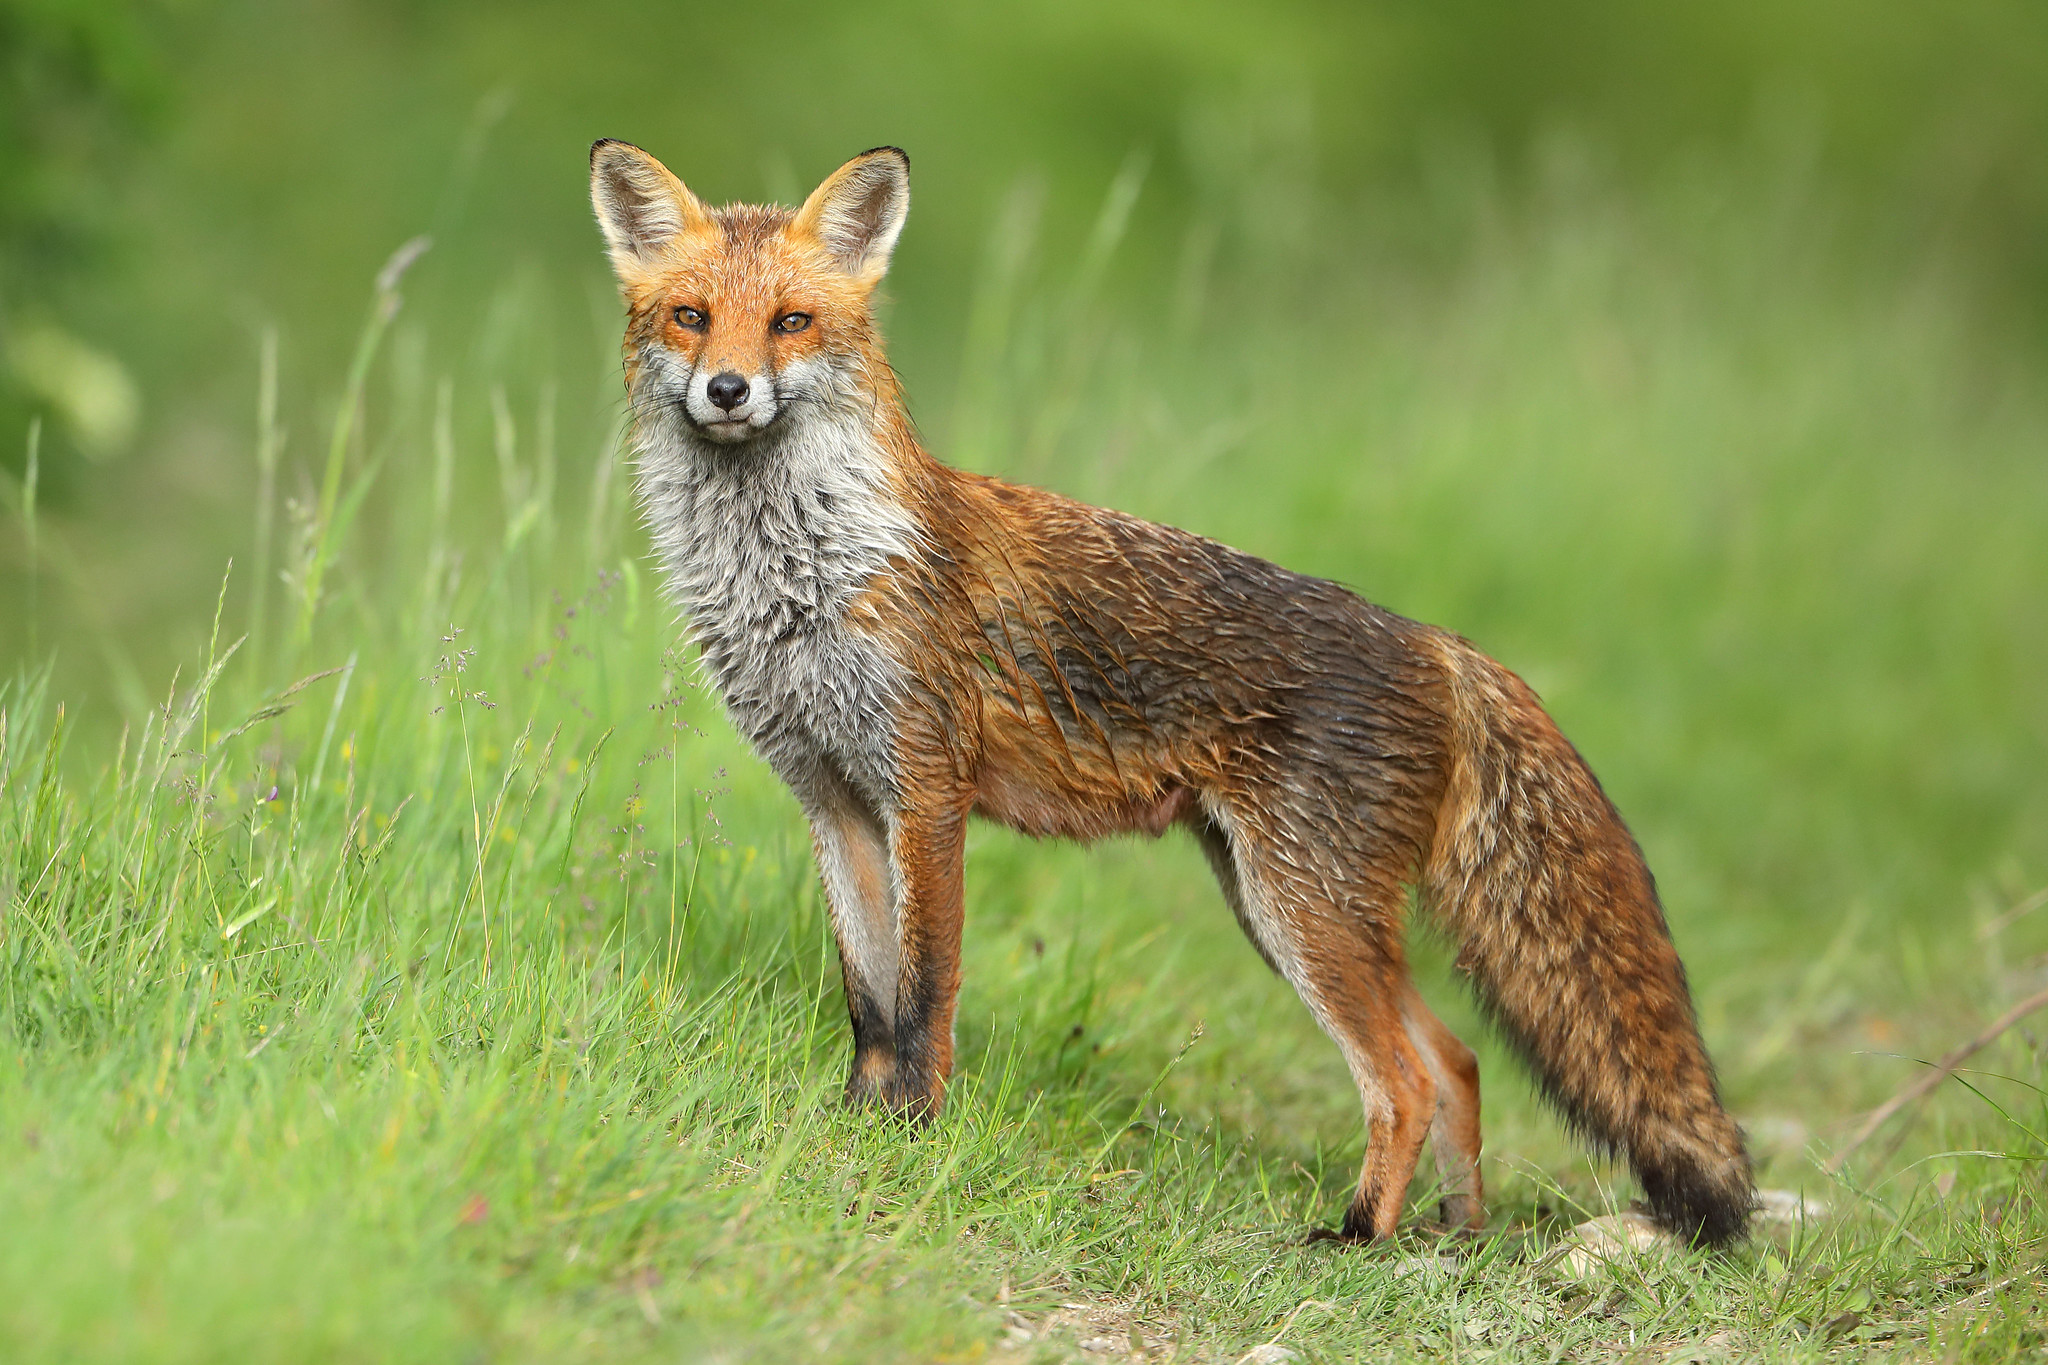 Red Fox (Vixen)